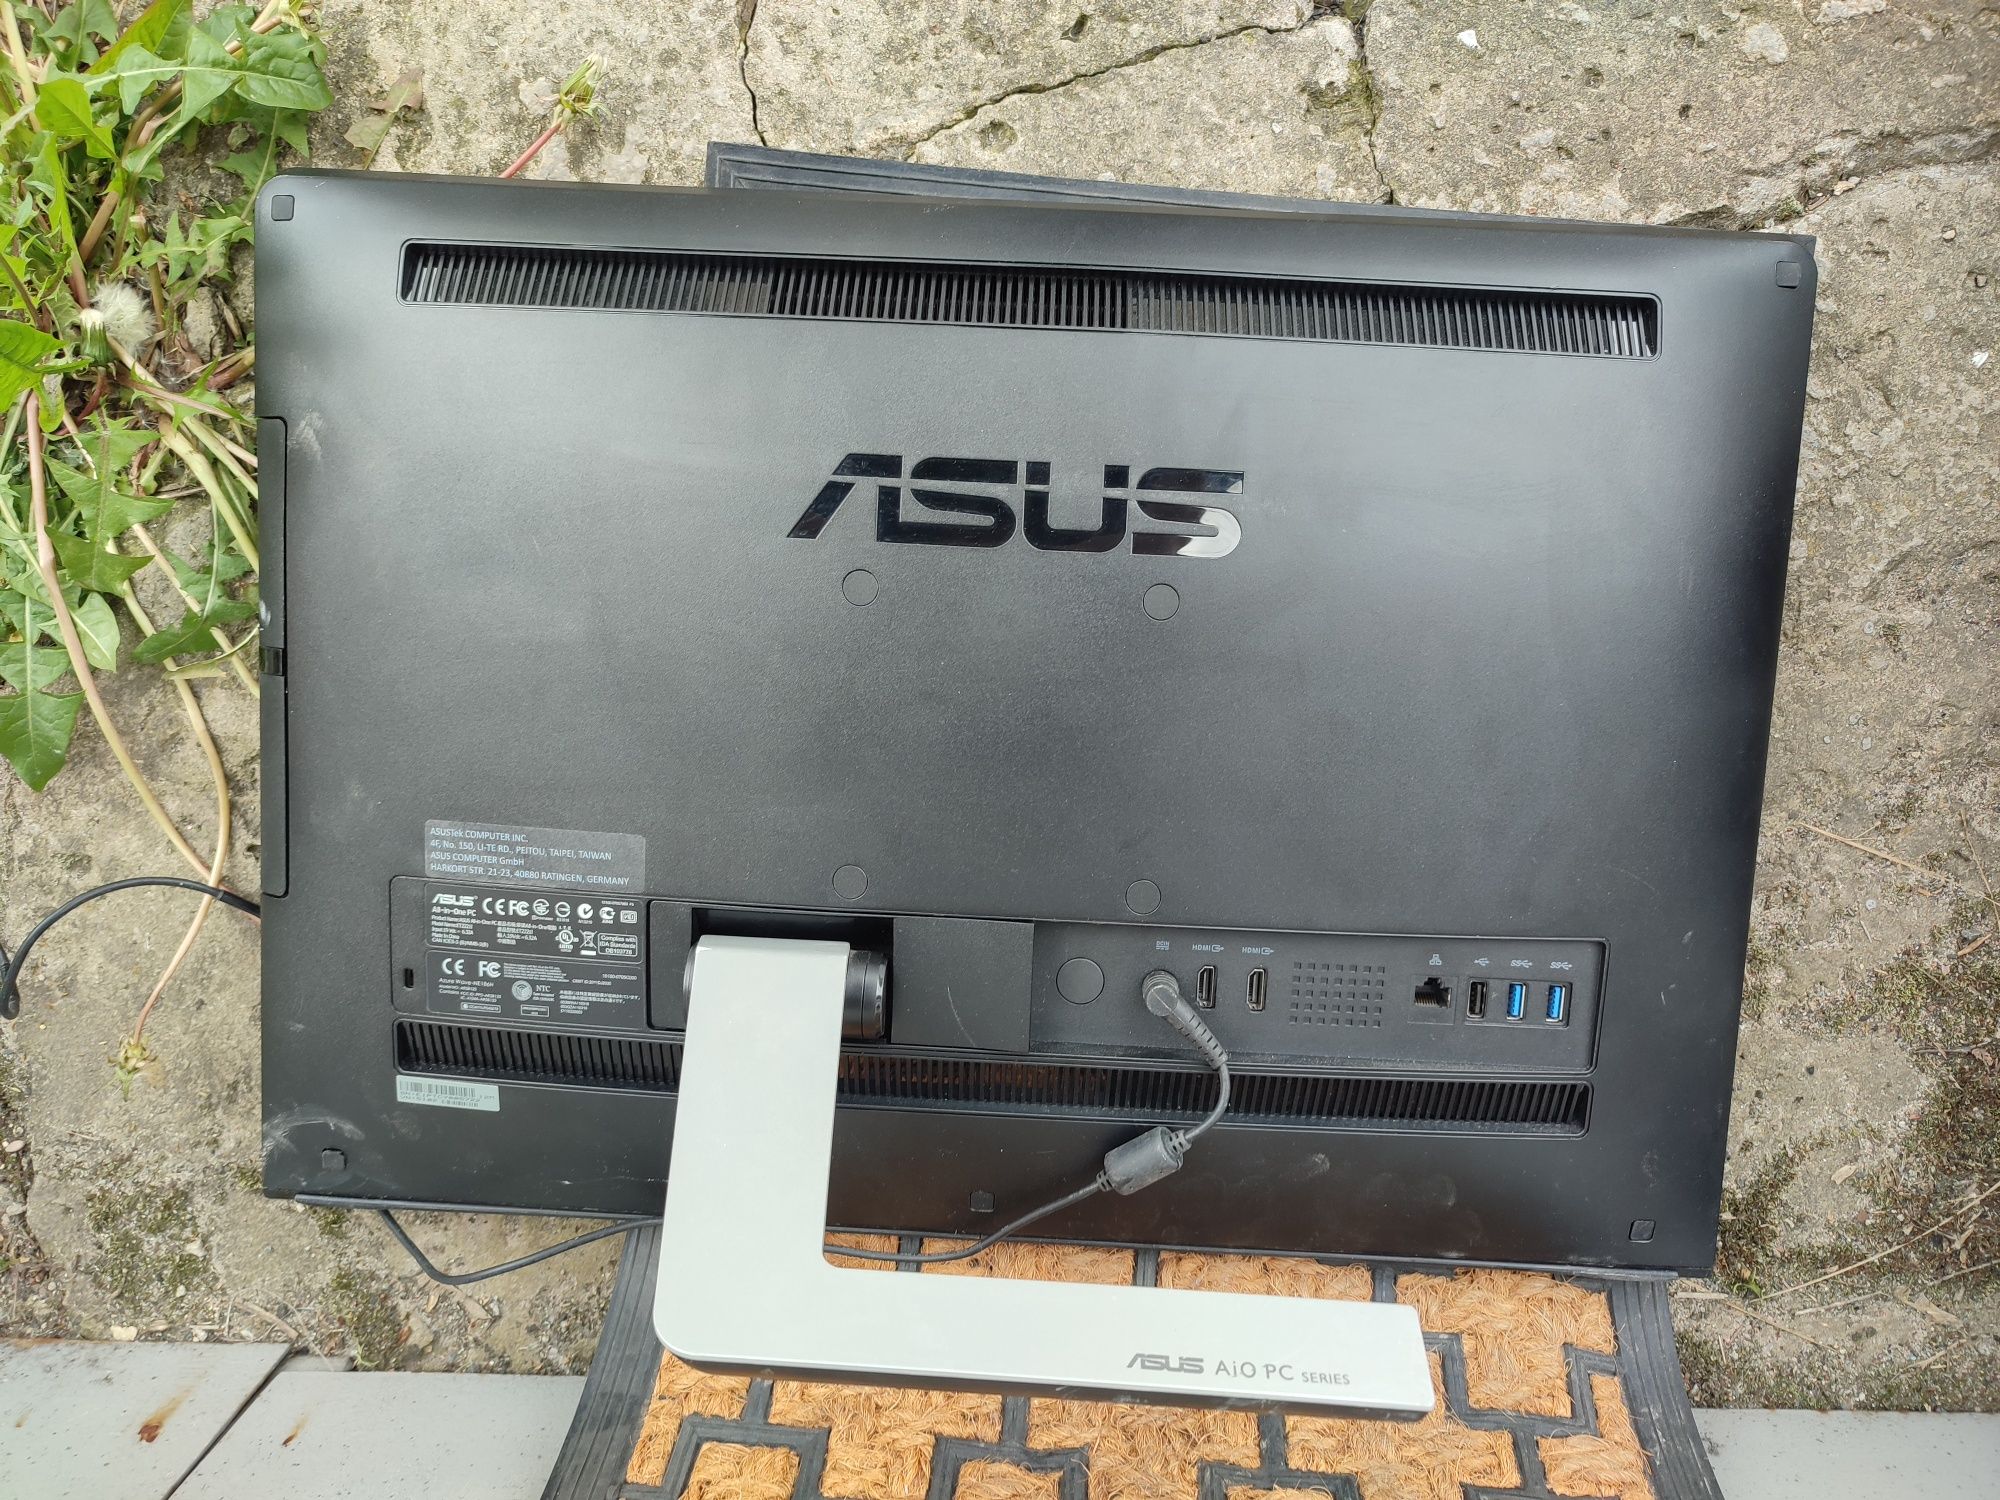 Моноблок Asus Pentium G3220T 4/500гб, GeForce GT 720M, 2 HDMI выхода